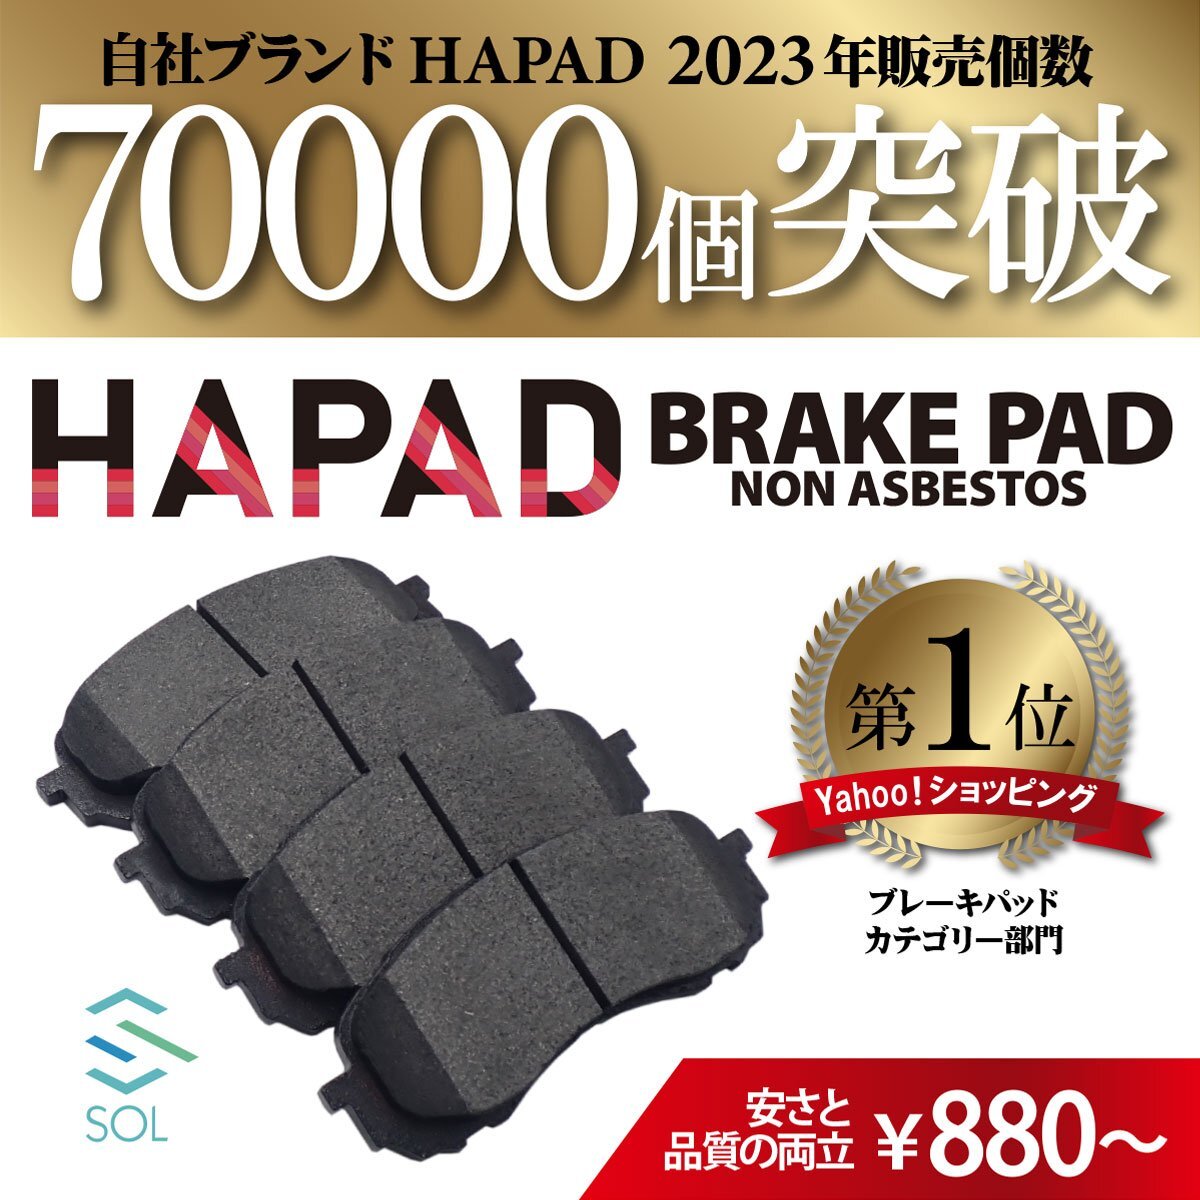  Toyota Mira iJPD10 rear brake pad left right set shipping deadline 18 hour car make special design 04466-47050 04466-47051 04466-47093 04466-52180